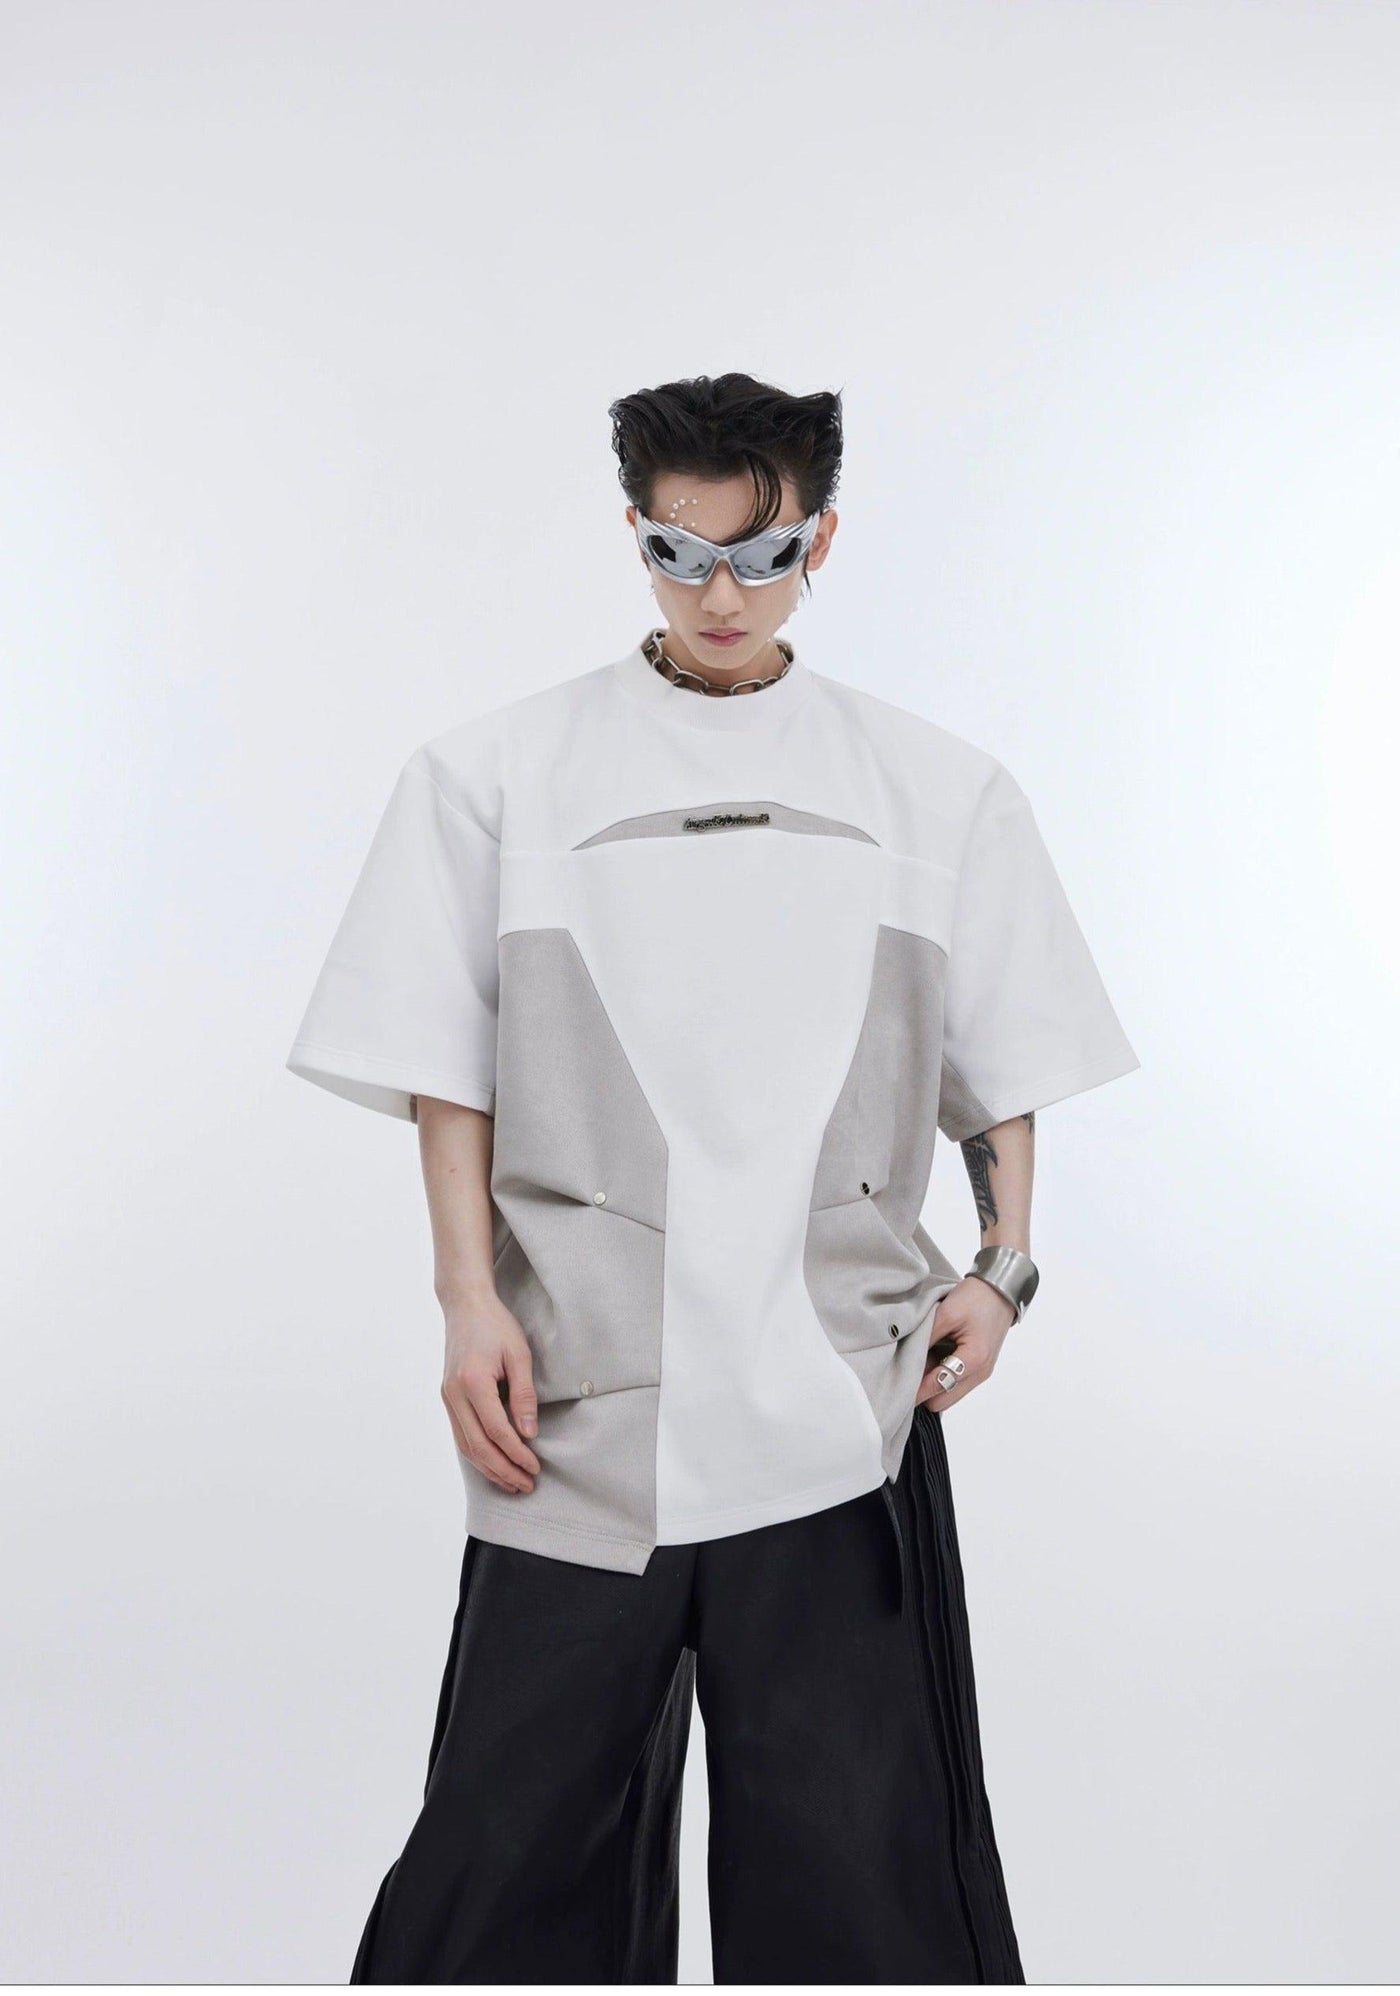 Leather Splice Detail T-Shirt Korean Street Fashion T-Shirt By Argue Culture Shop Online at OH Vault